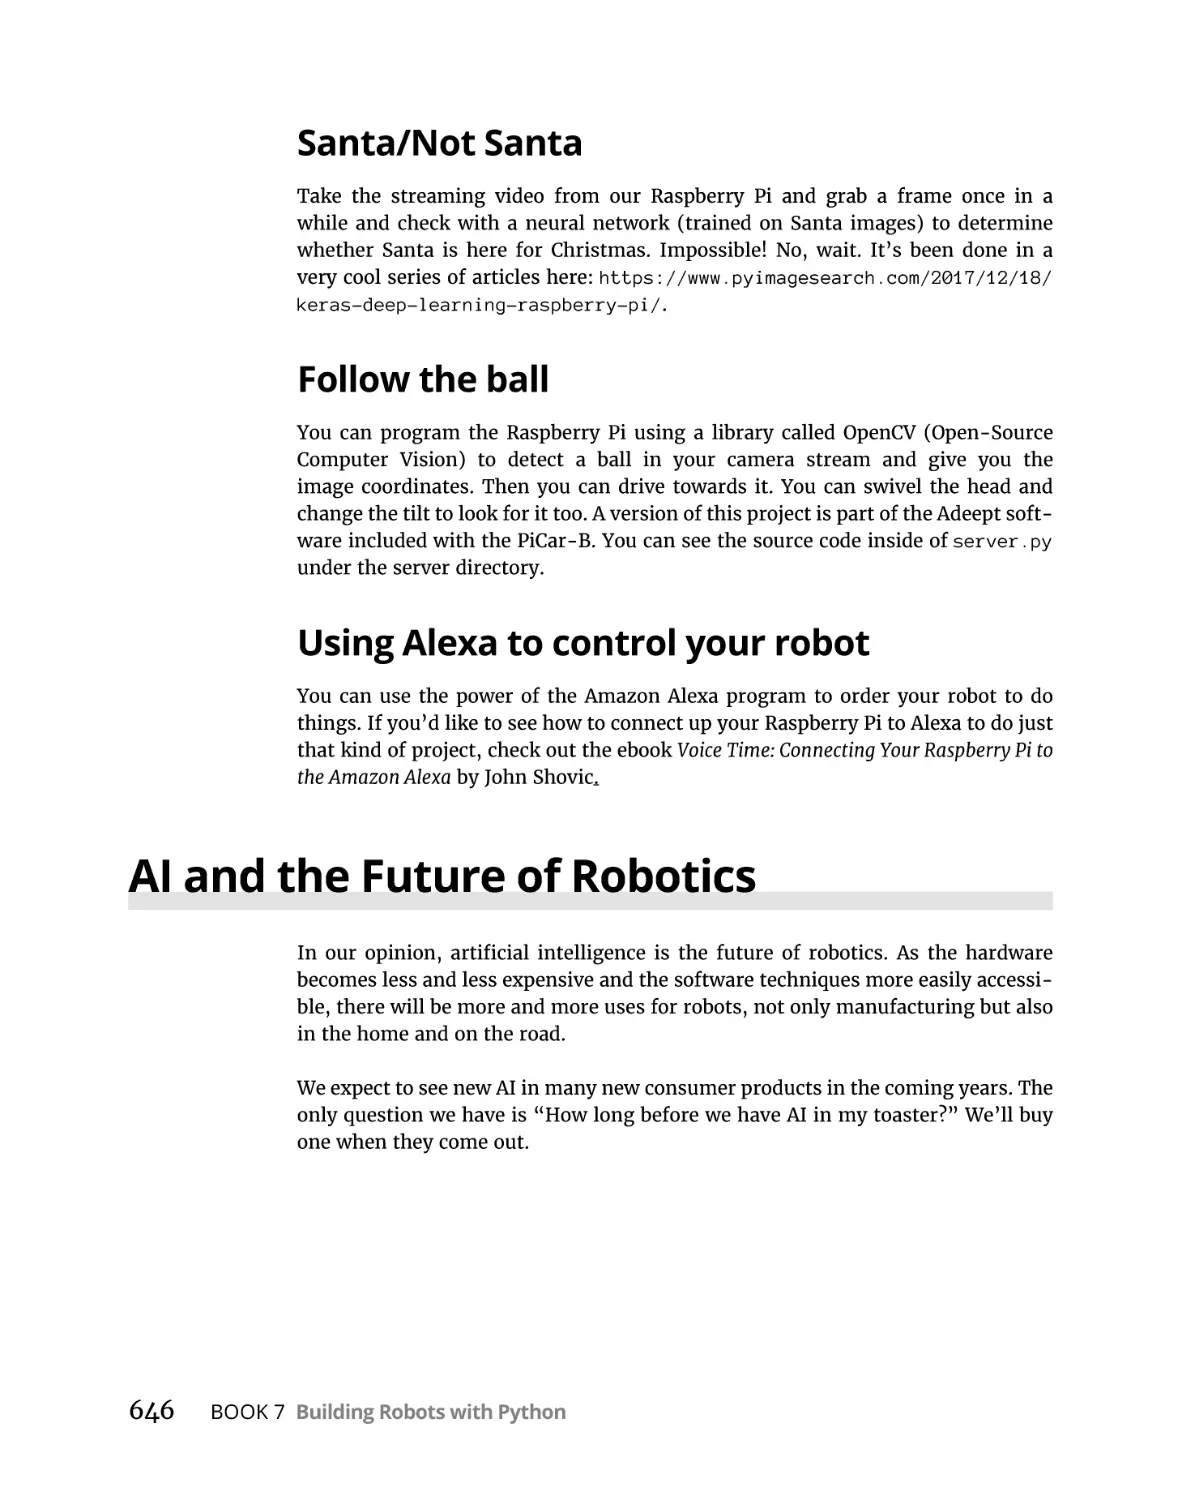 Santa/Not Santa
Follow the ball
Using Alexa to control your robot
AI and the Future of Robotics